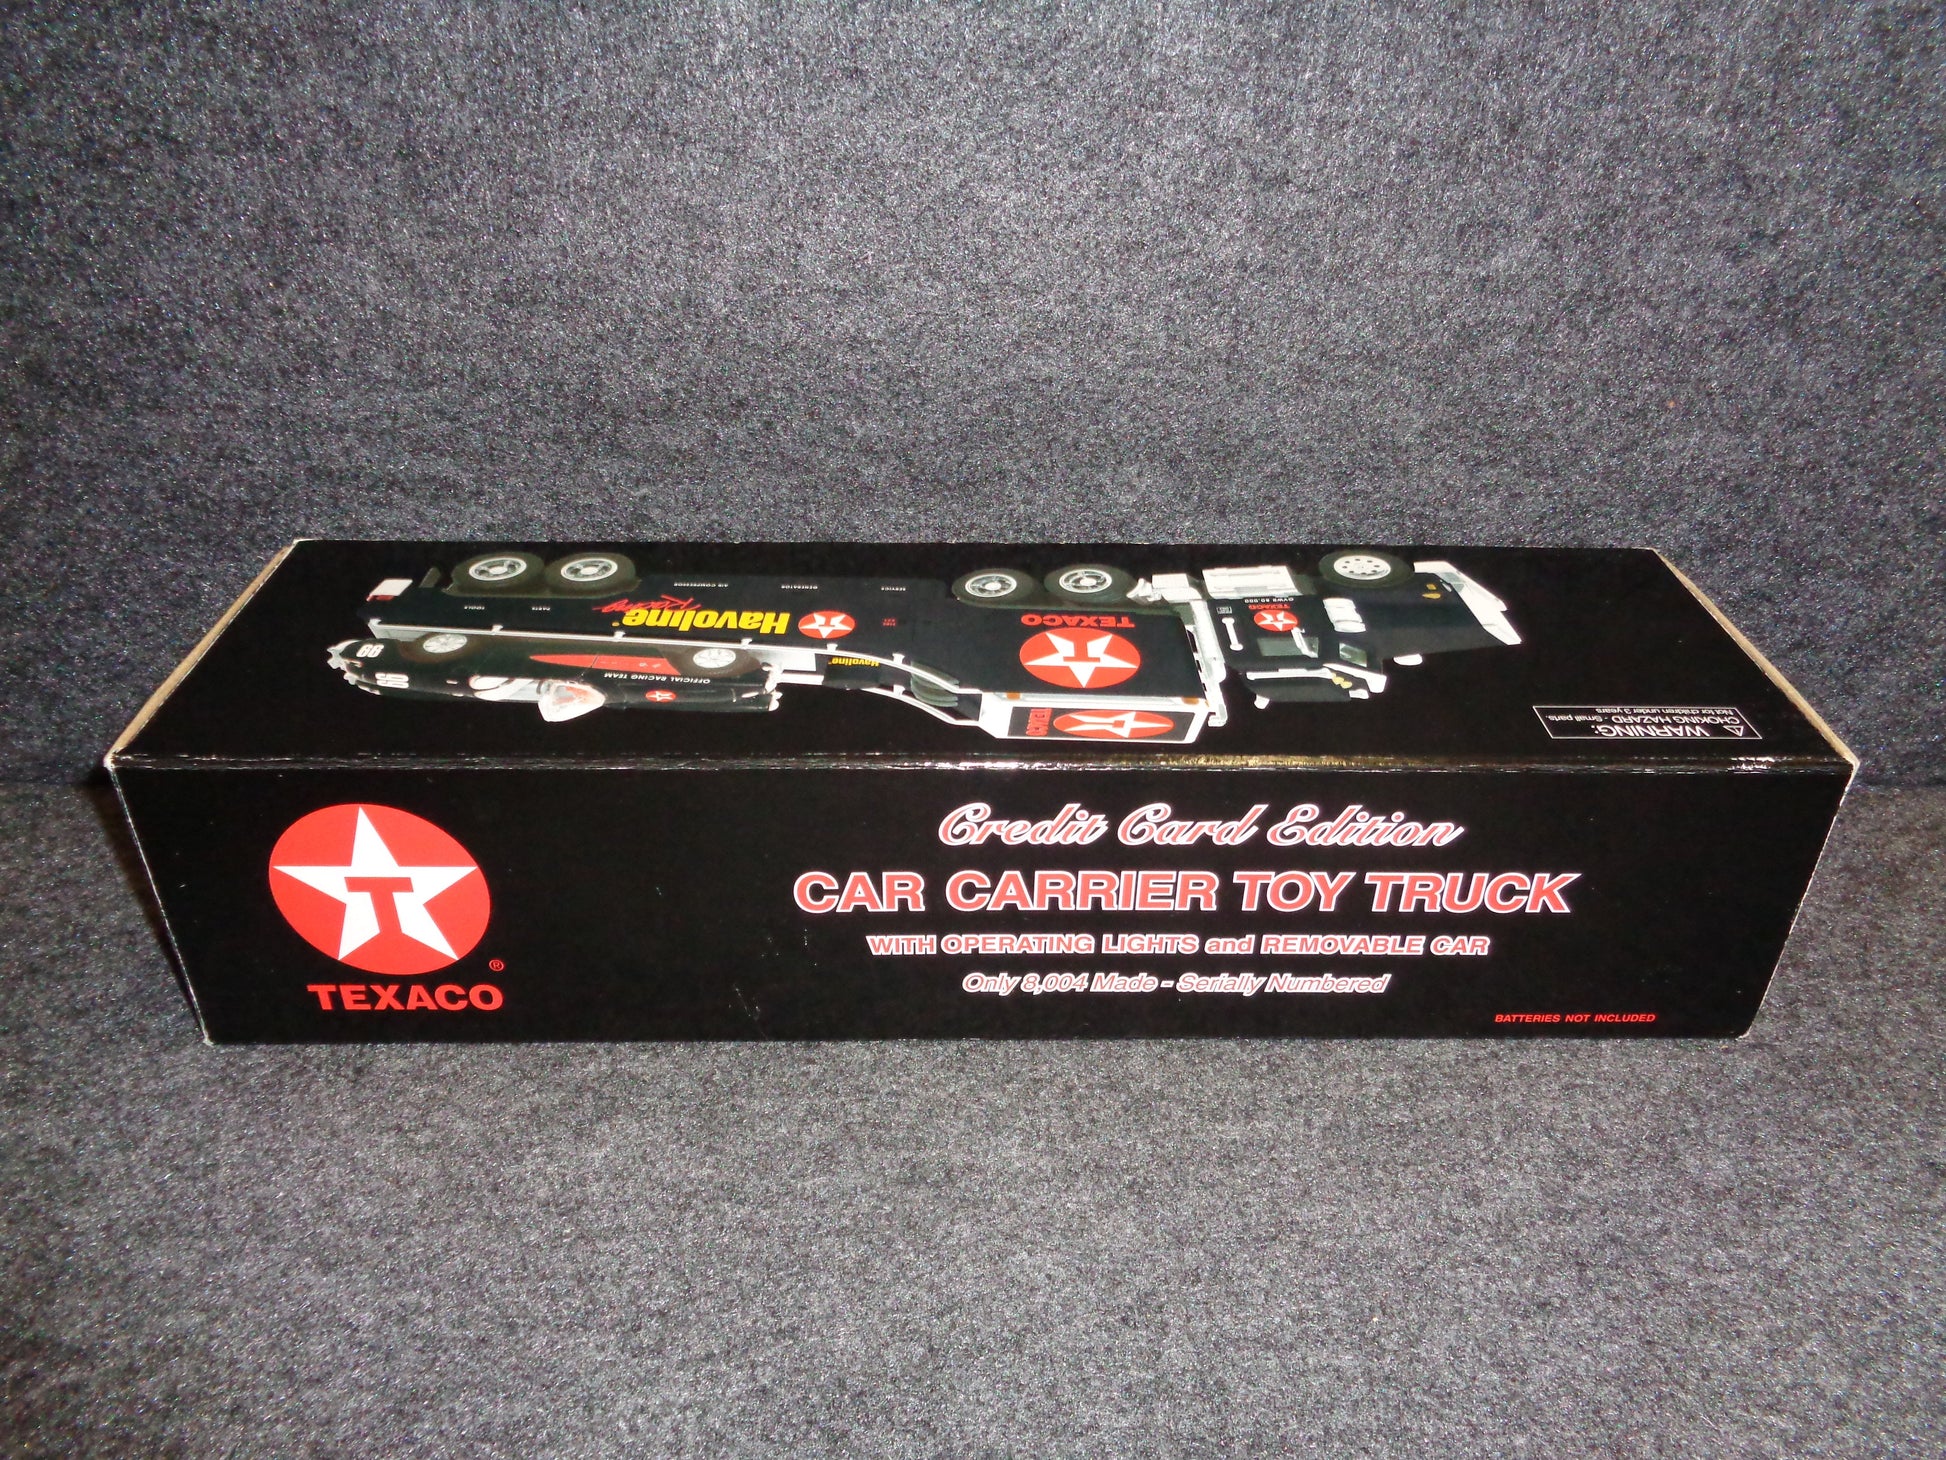 Texaco Car Carrier Truck & Chevrolet Corvette Credit Card Series